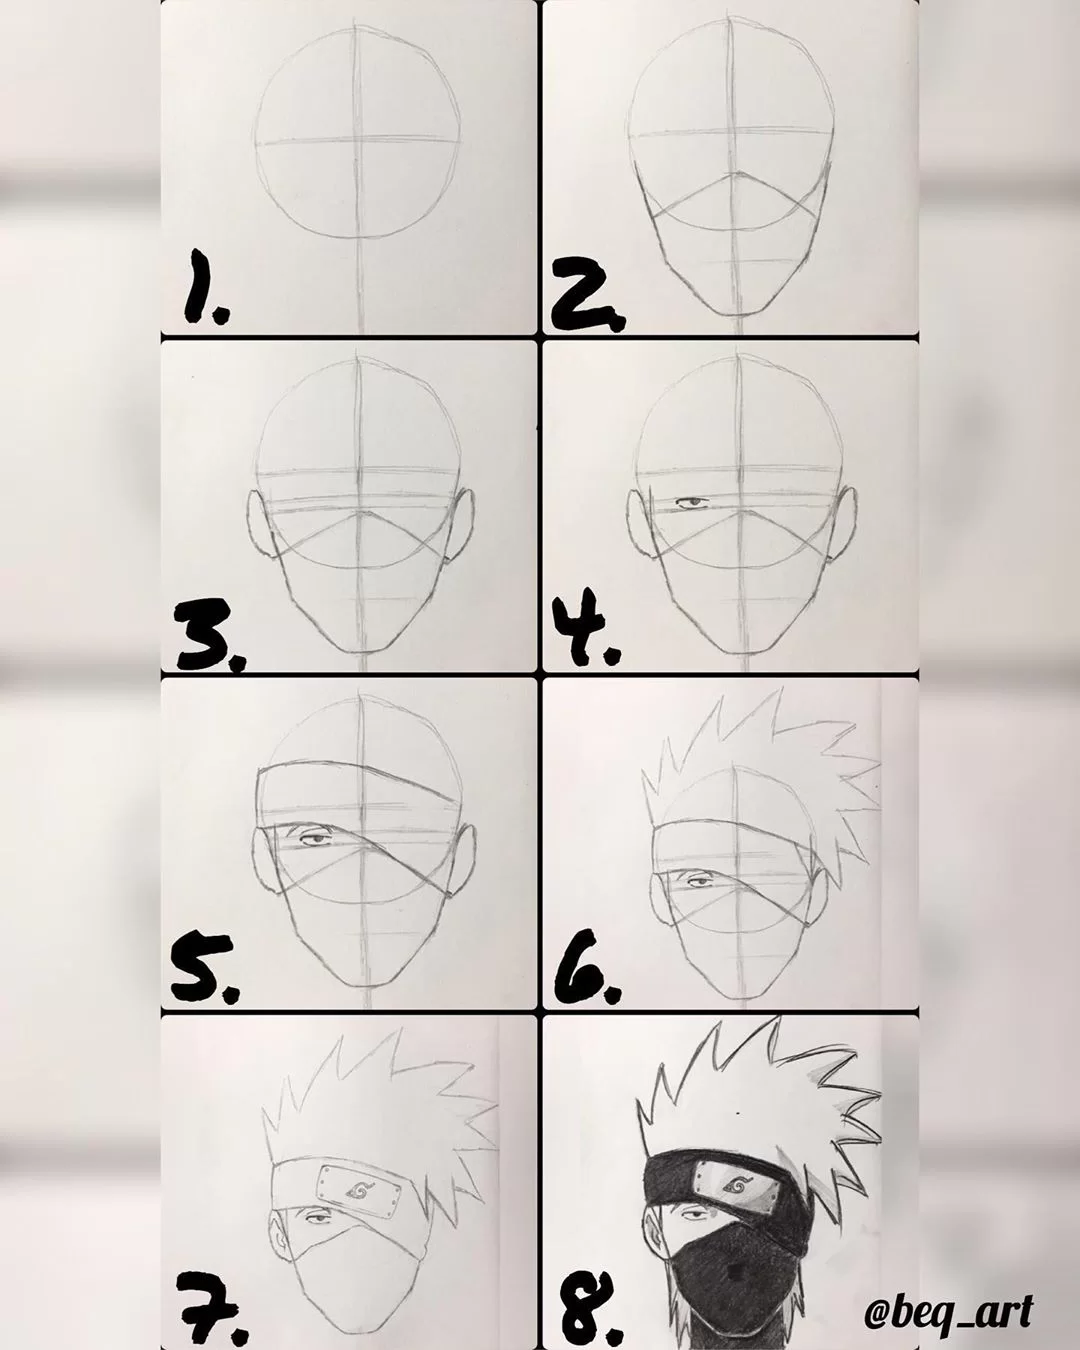 how to draw anime boy step by step